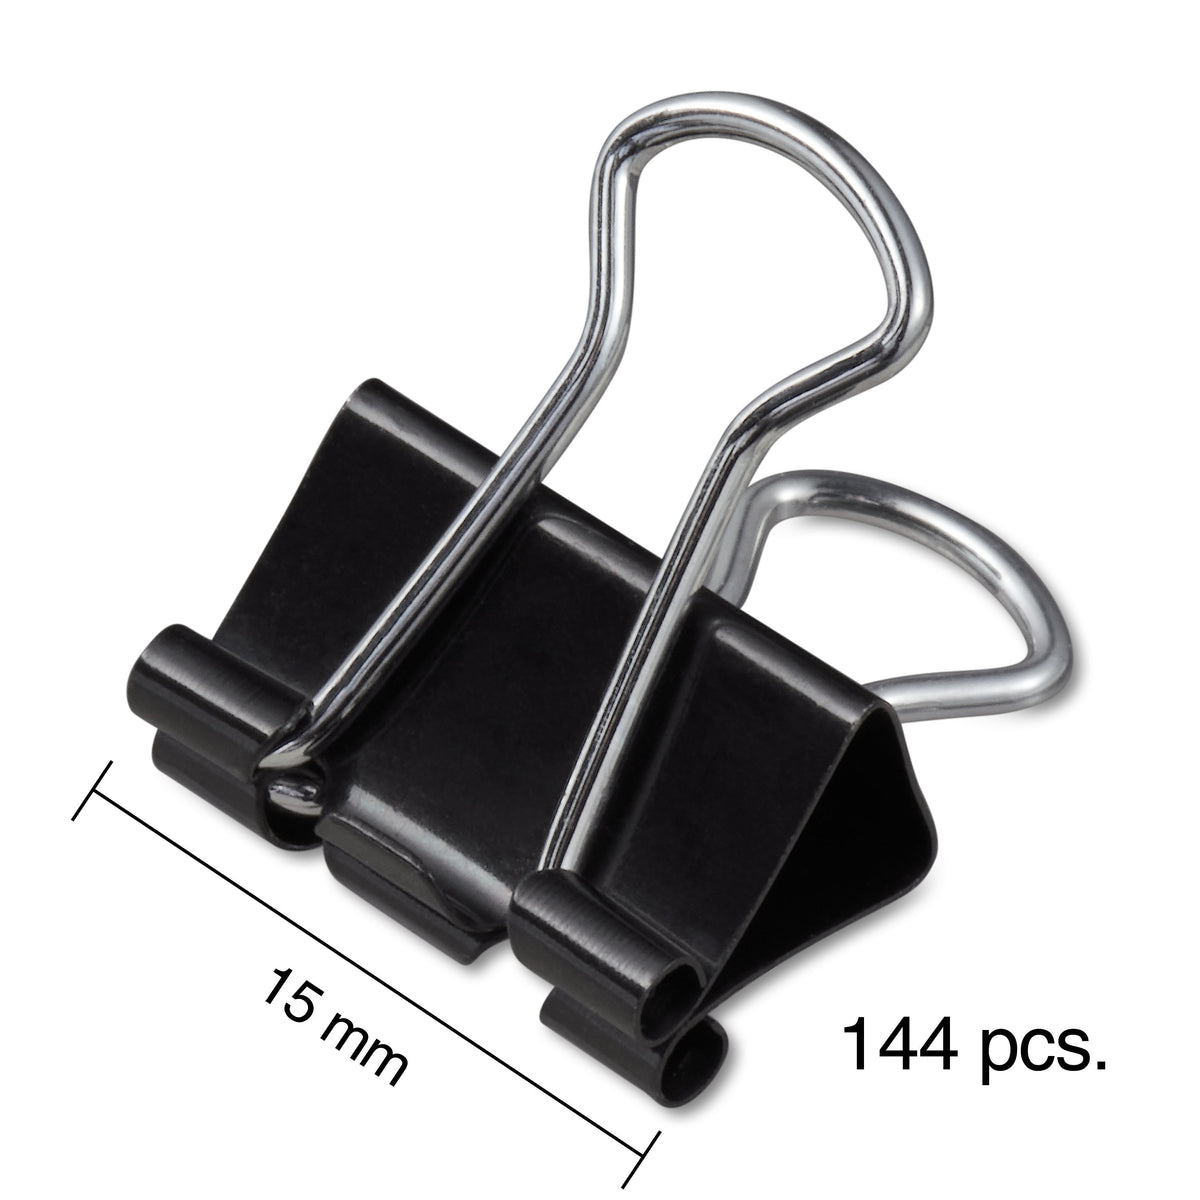 Staples 0.6" Binder Clips, Mini, Black, 144/Pack